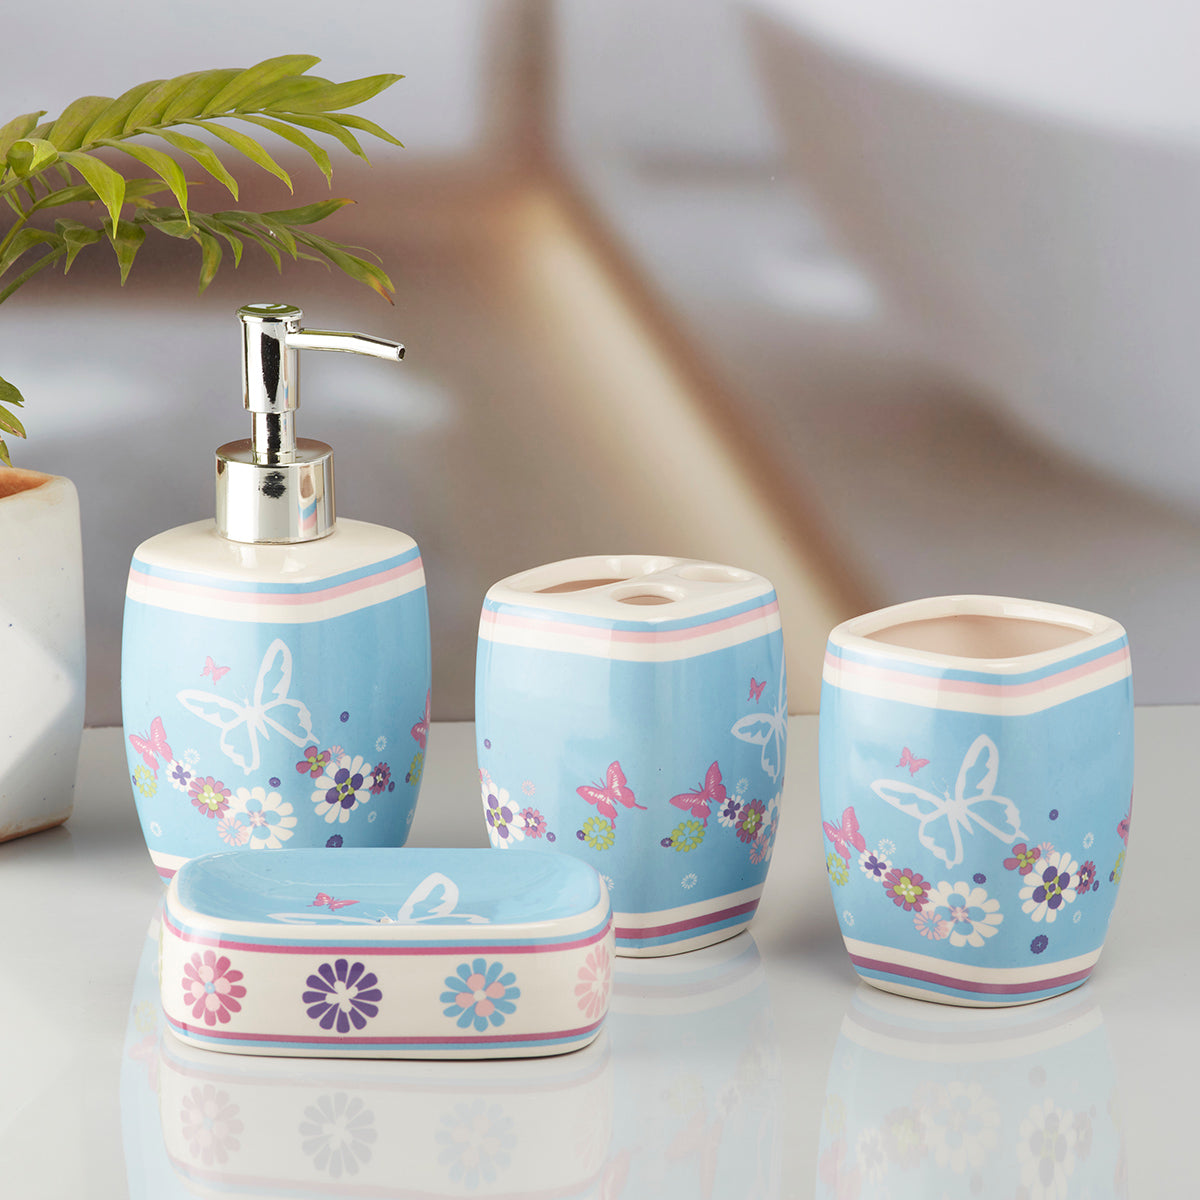 Ceramic Bathroom Accessories Set of 4 Bath Set with Soap Dispenser (10218)